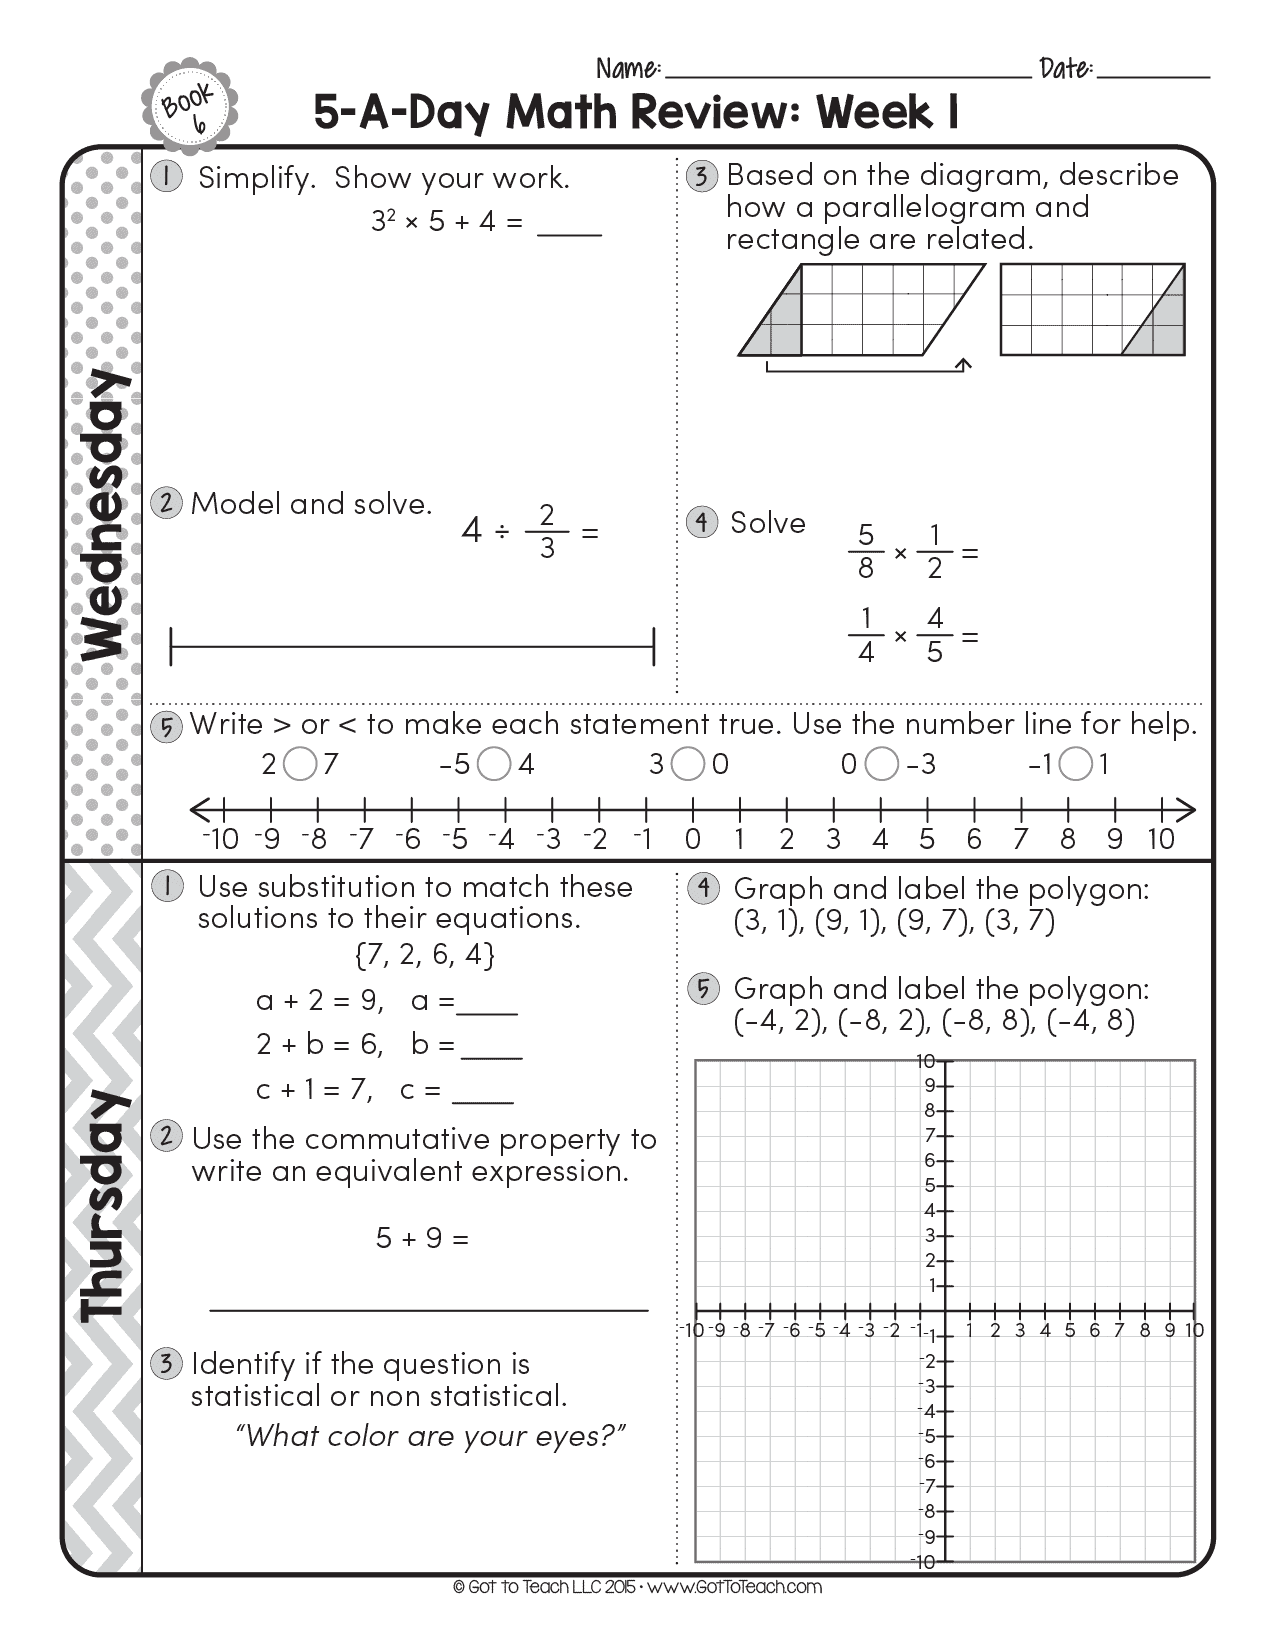 6th grade math review